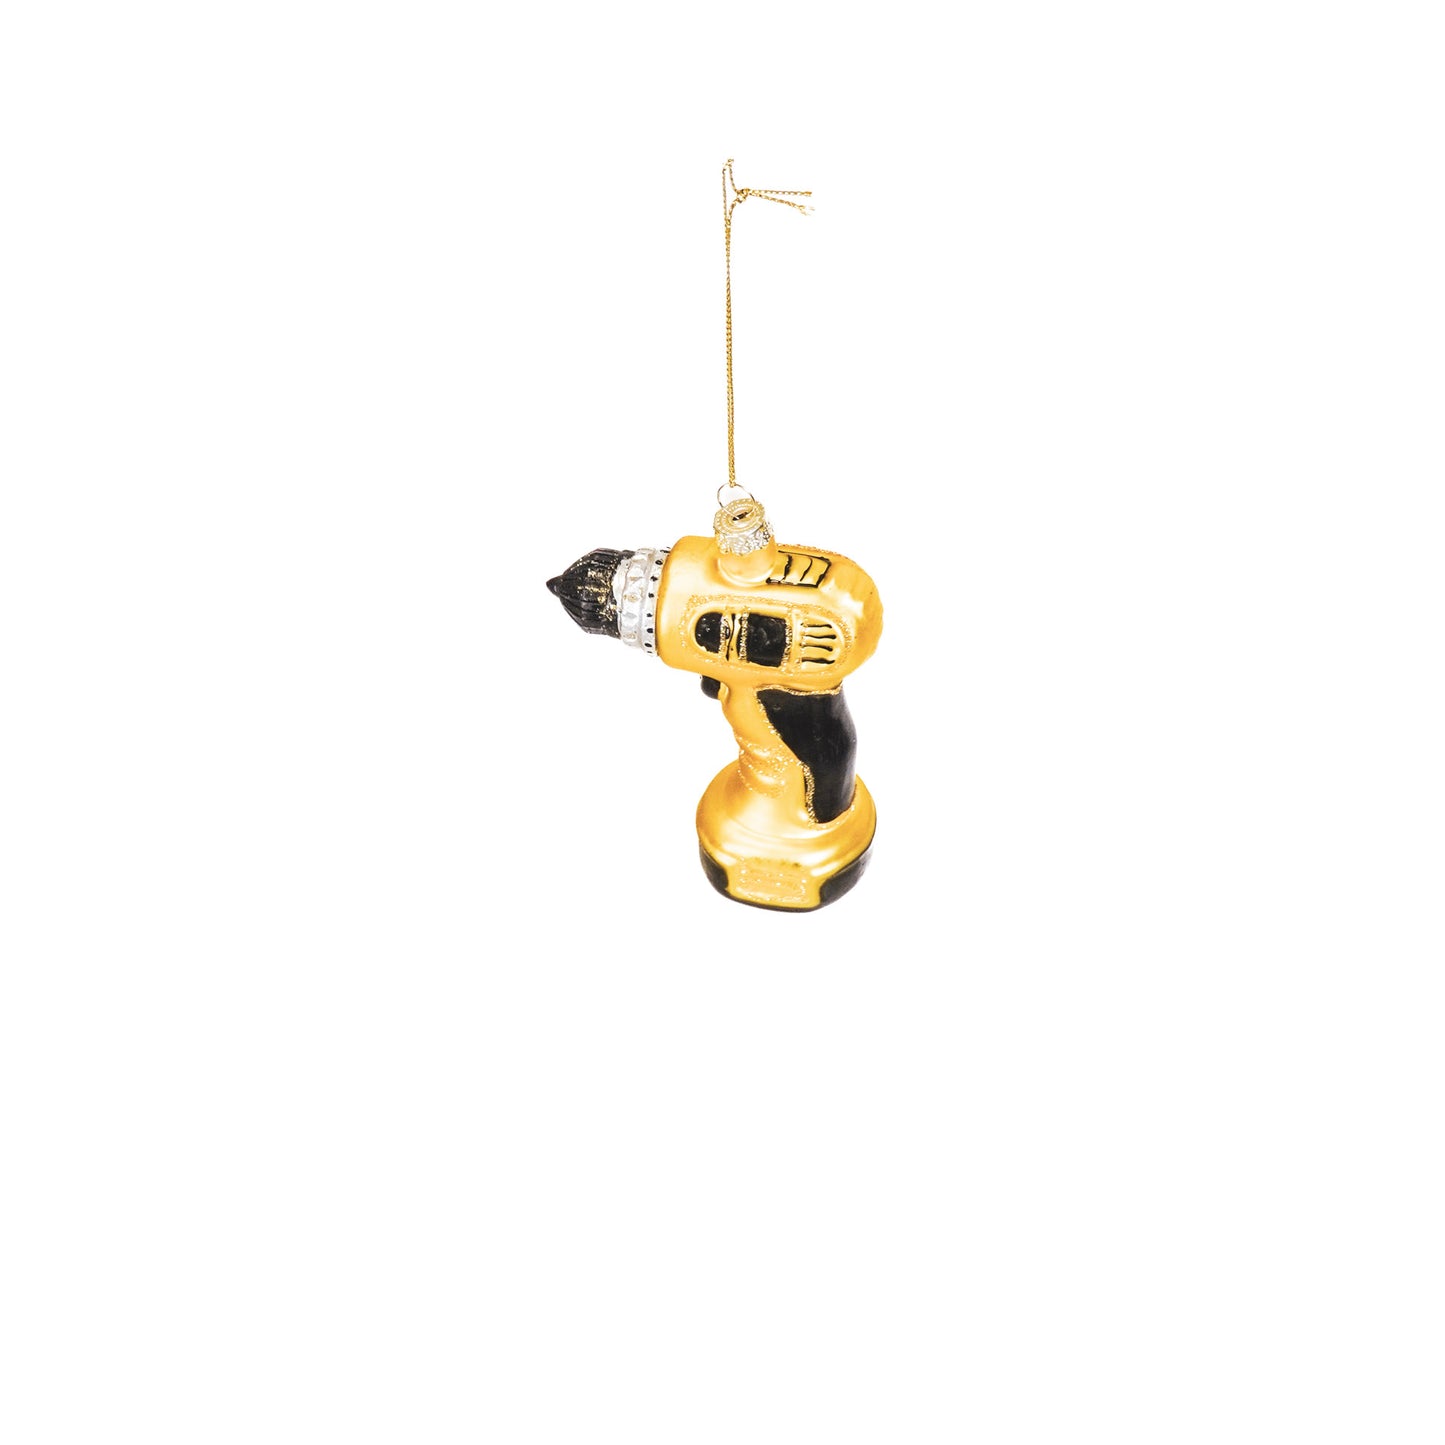 Ornament - Xmas Hanger - Drill -Glass - 8x4x10,5cm